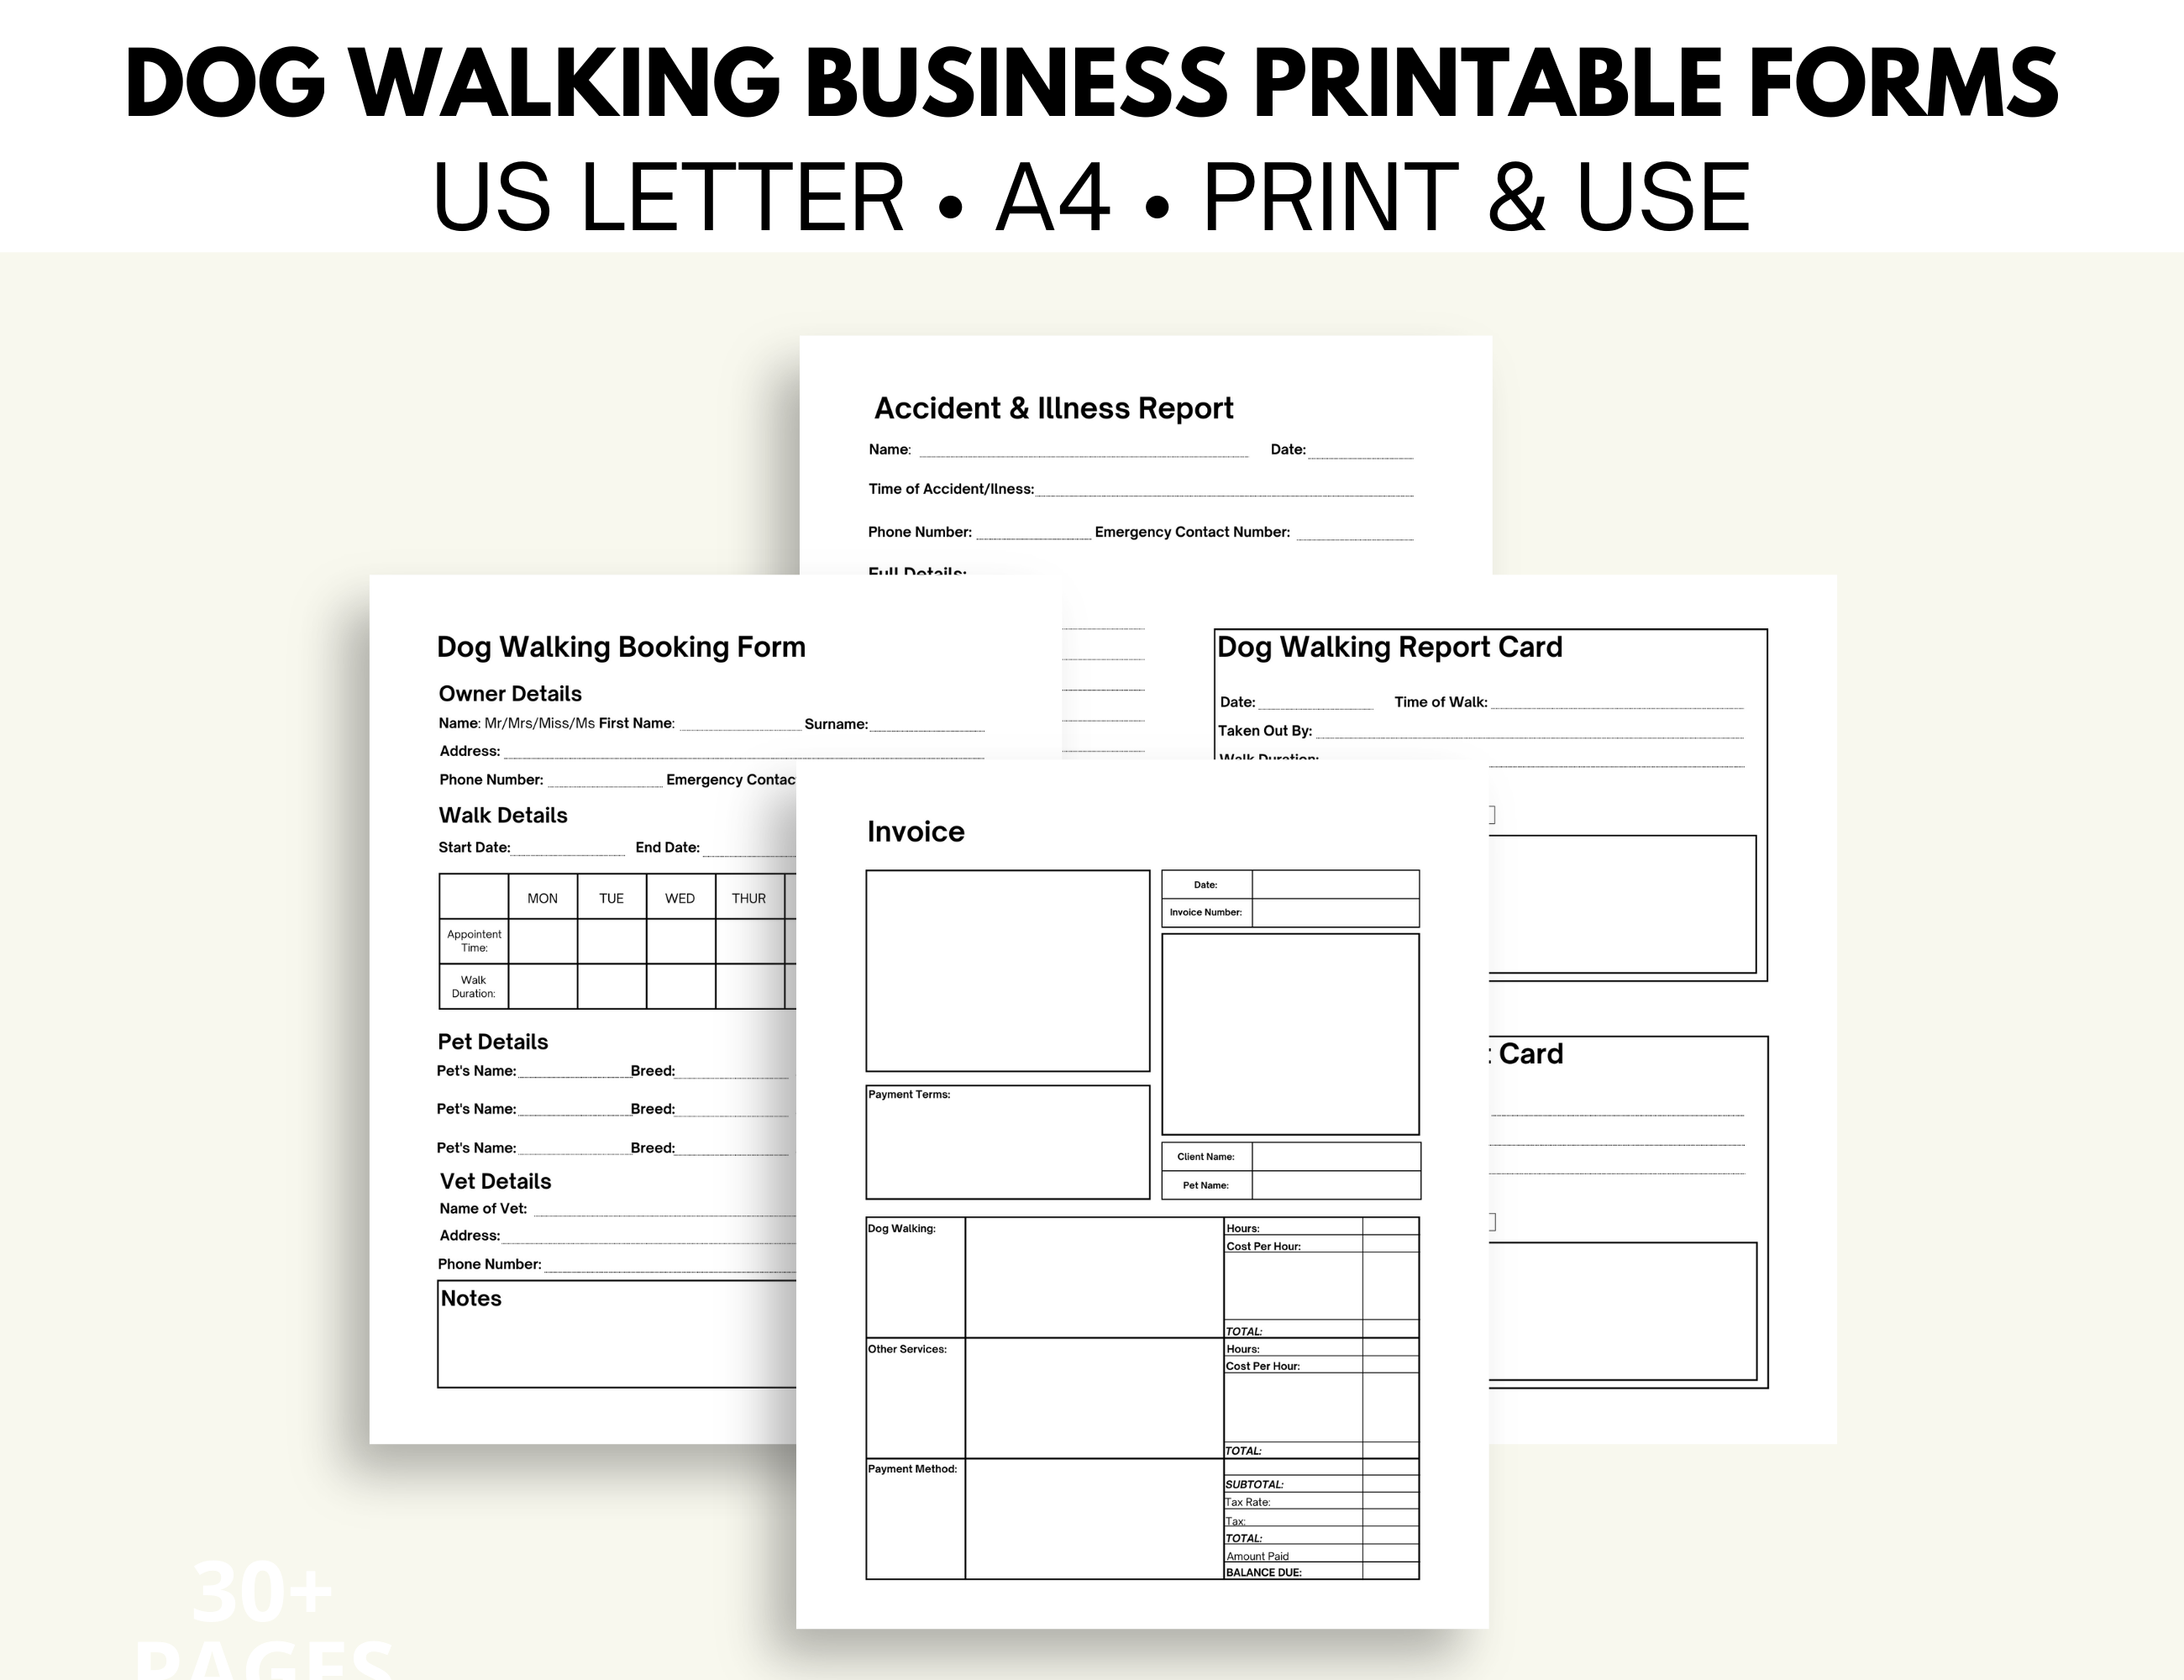 Printable dog walking business forms.